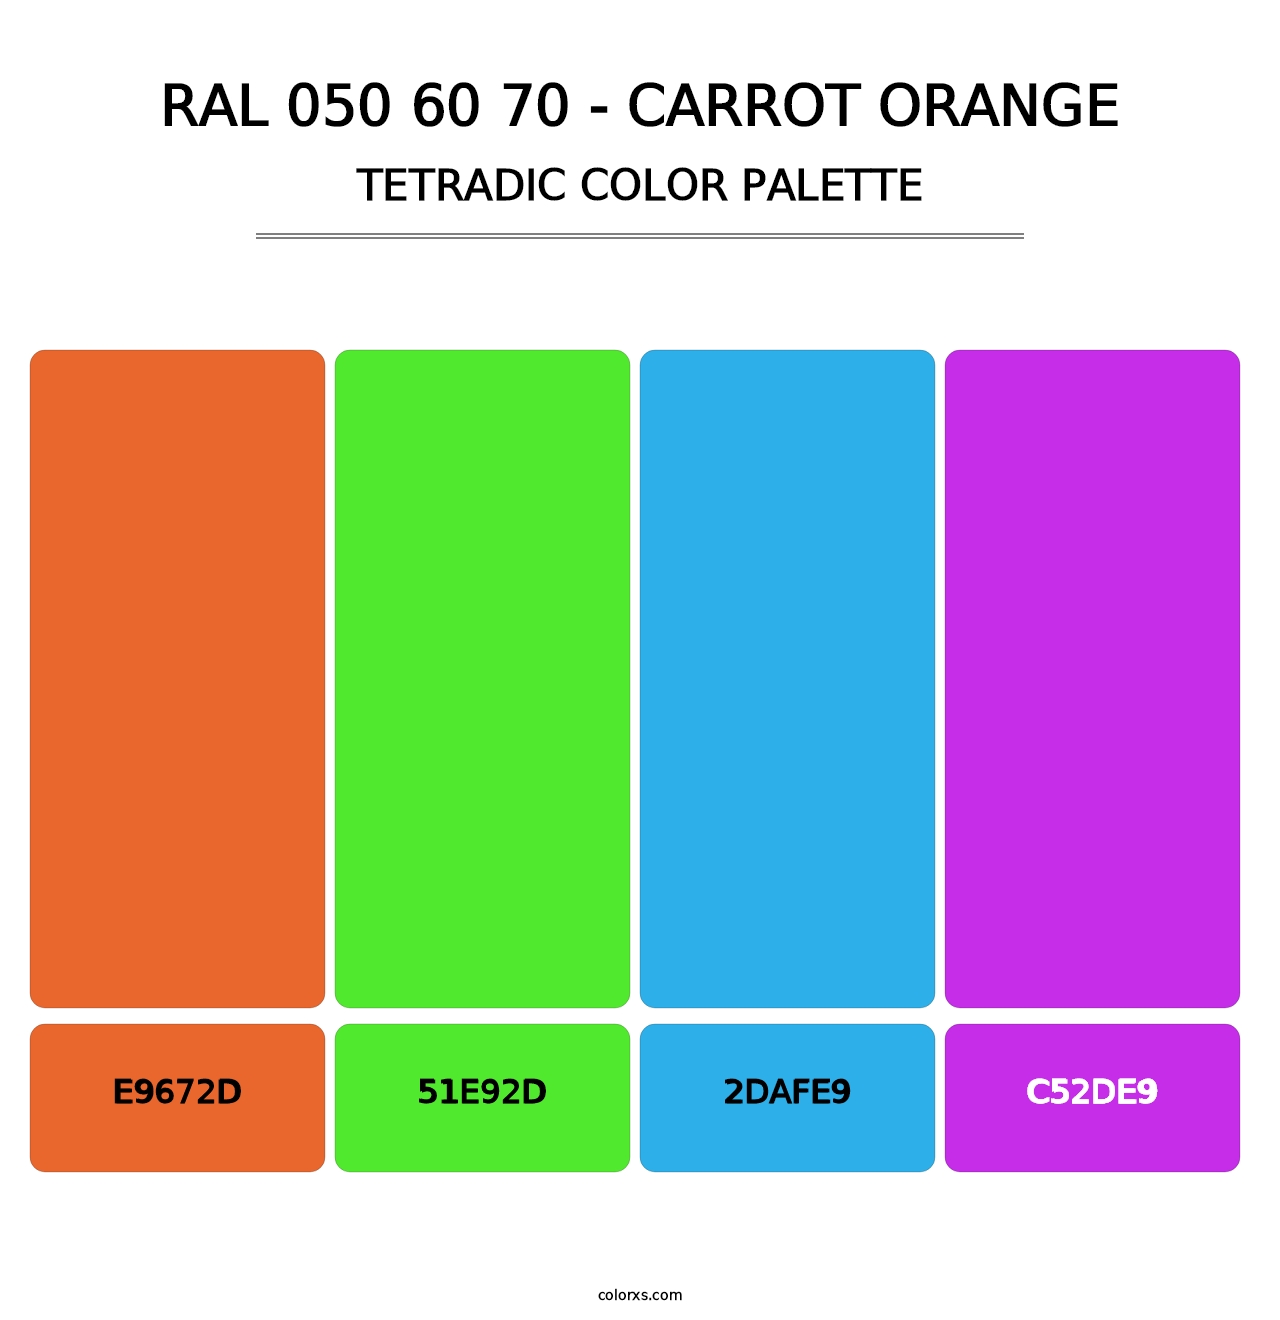 RAL 050 60 70 - Carrot Orange - Tetradic Color Palette